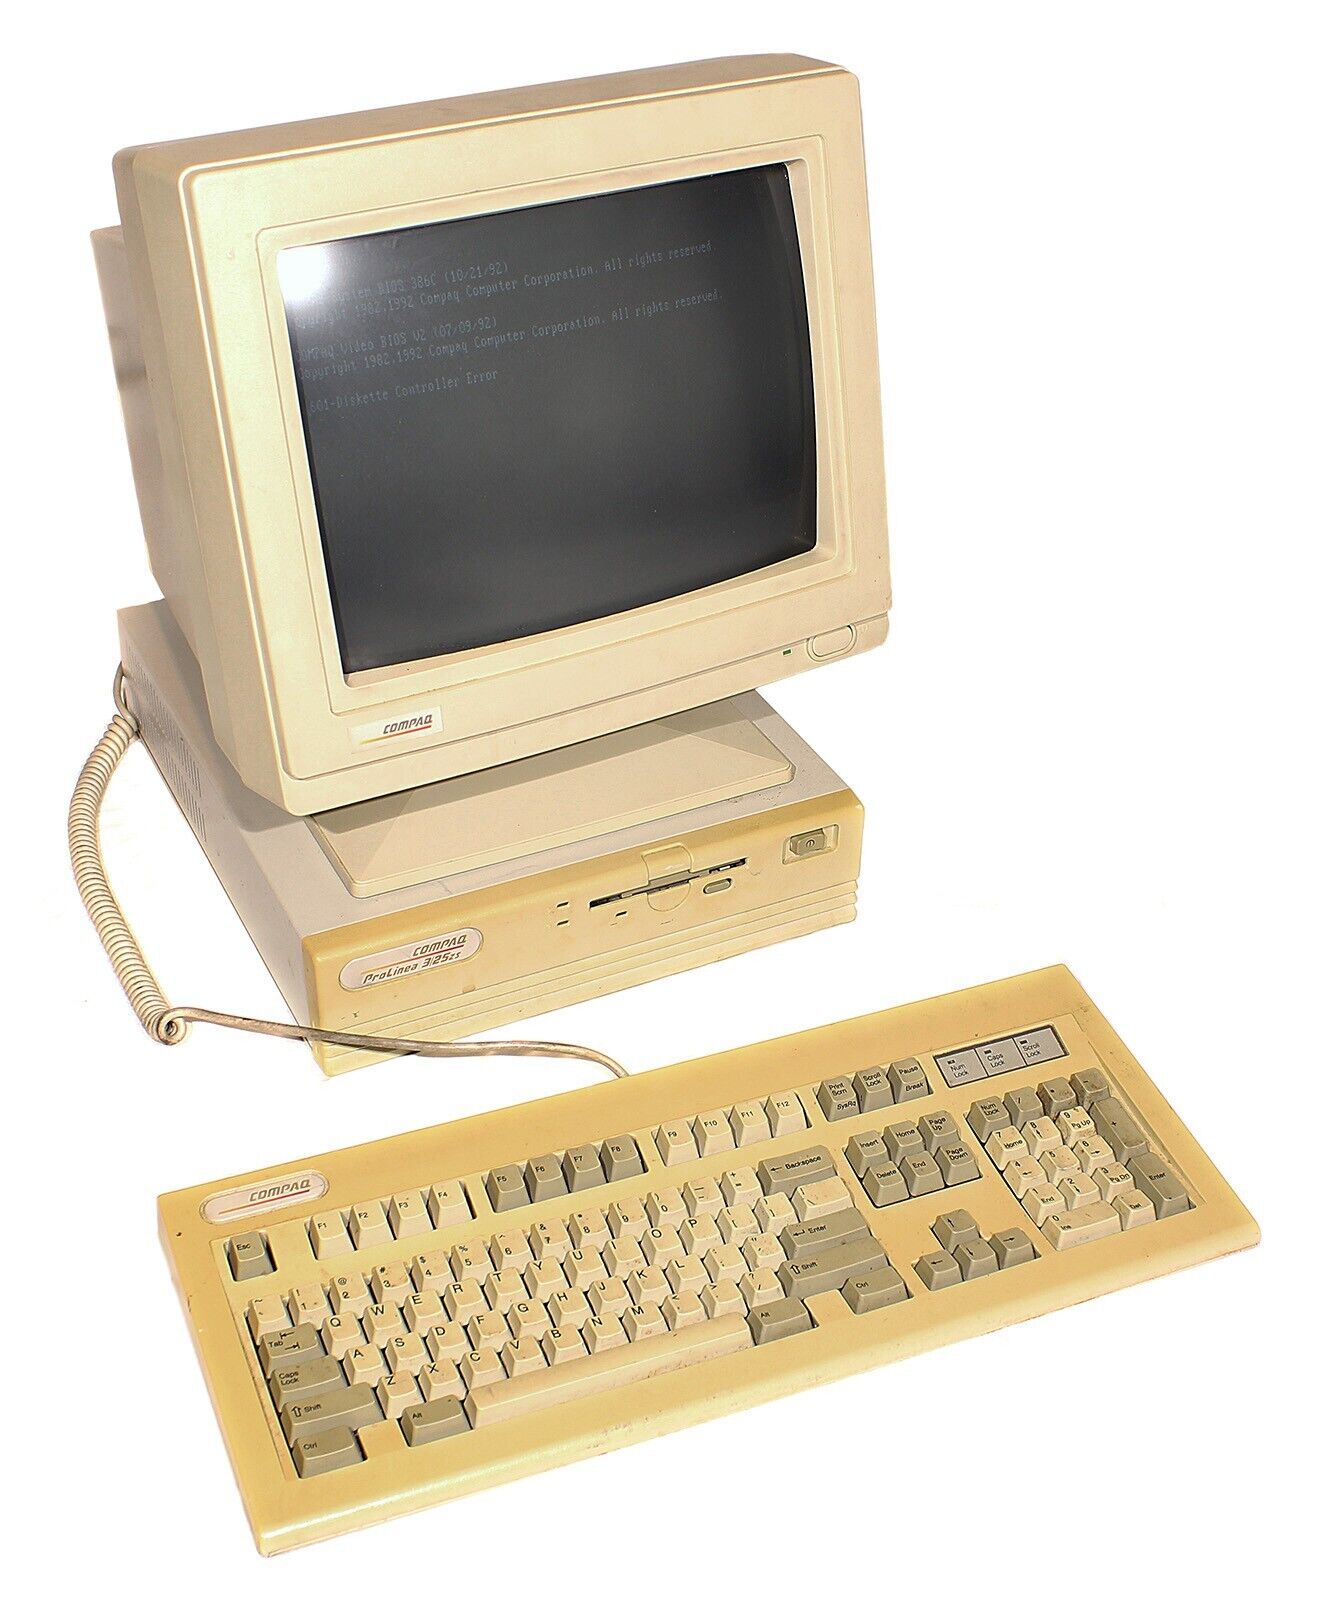 Compaq ProLinea 3 25/zs Computer Vintage